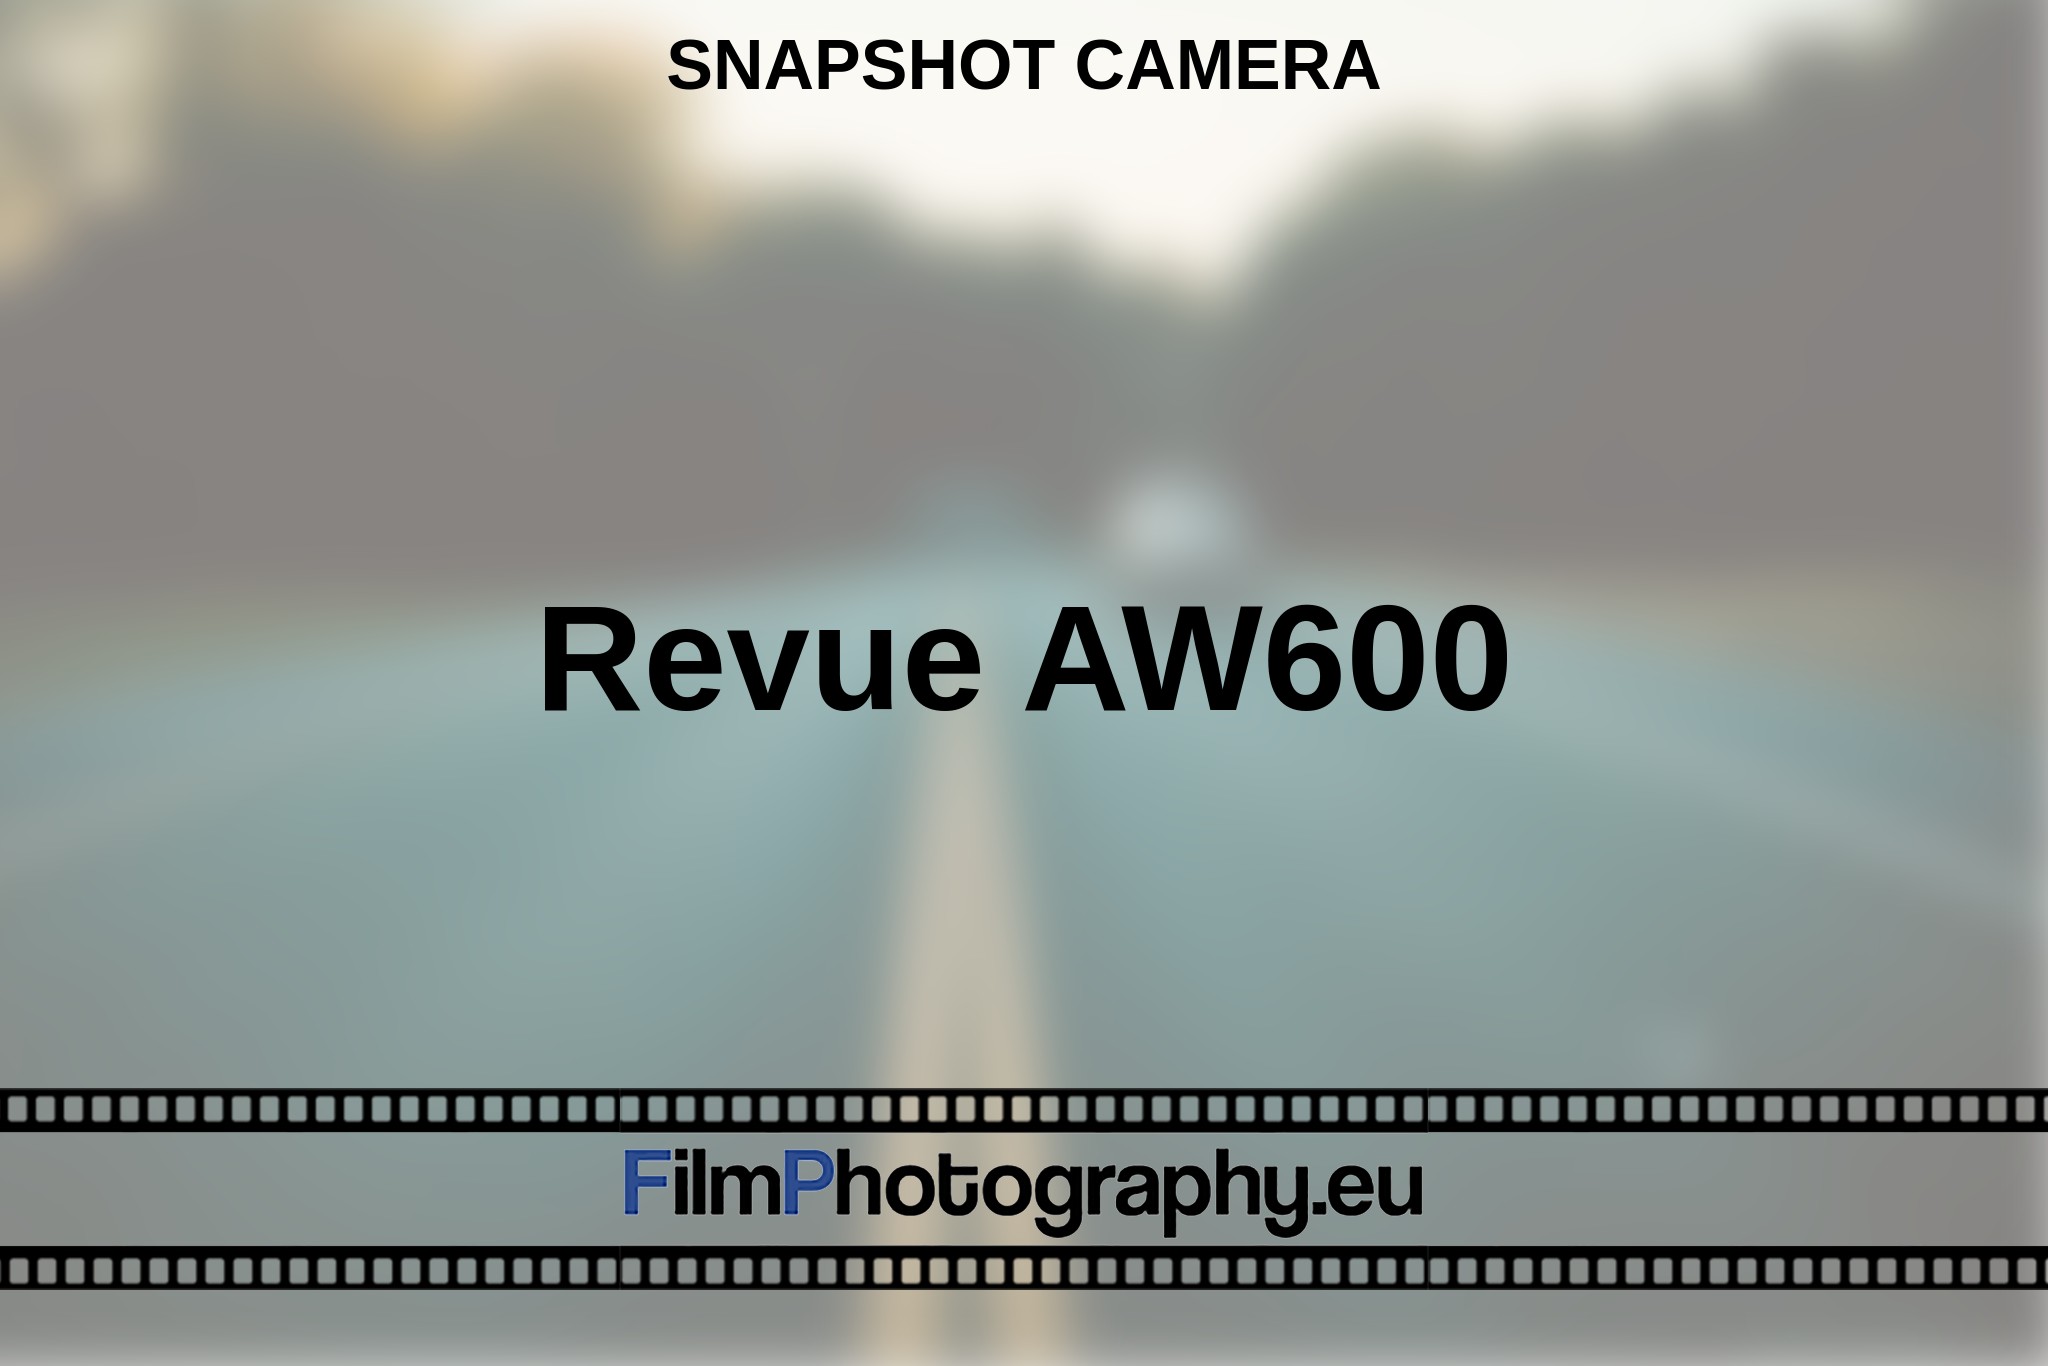 revue-aw600-snapshot-camera-bnv.jpg